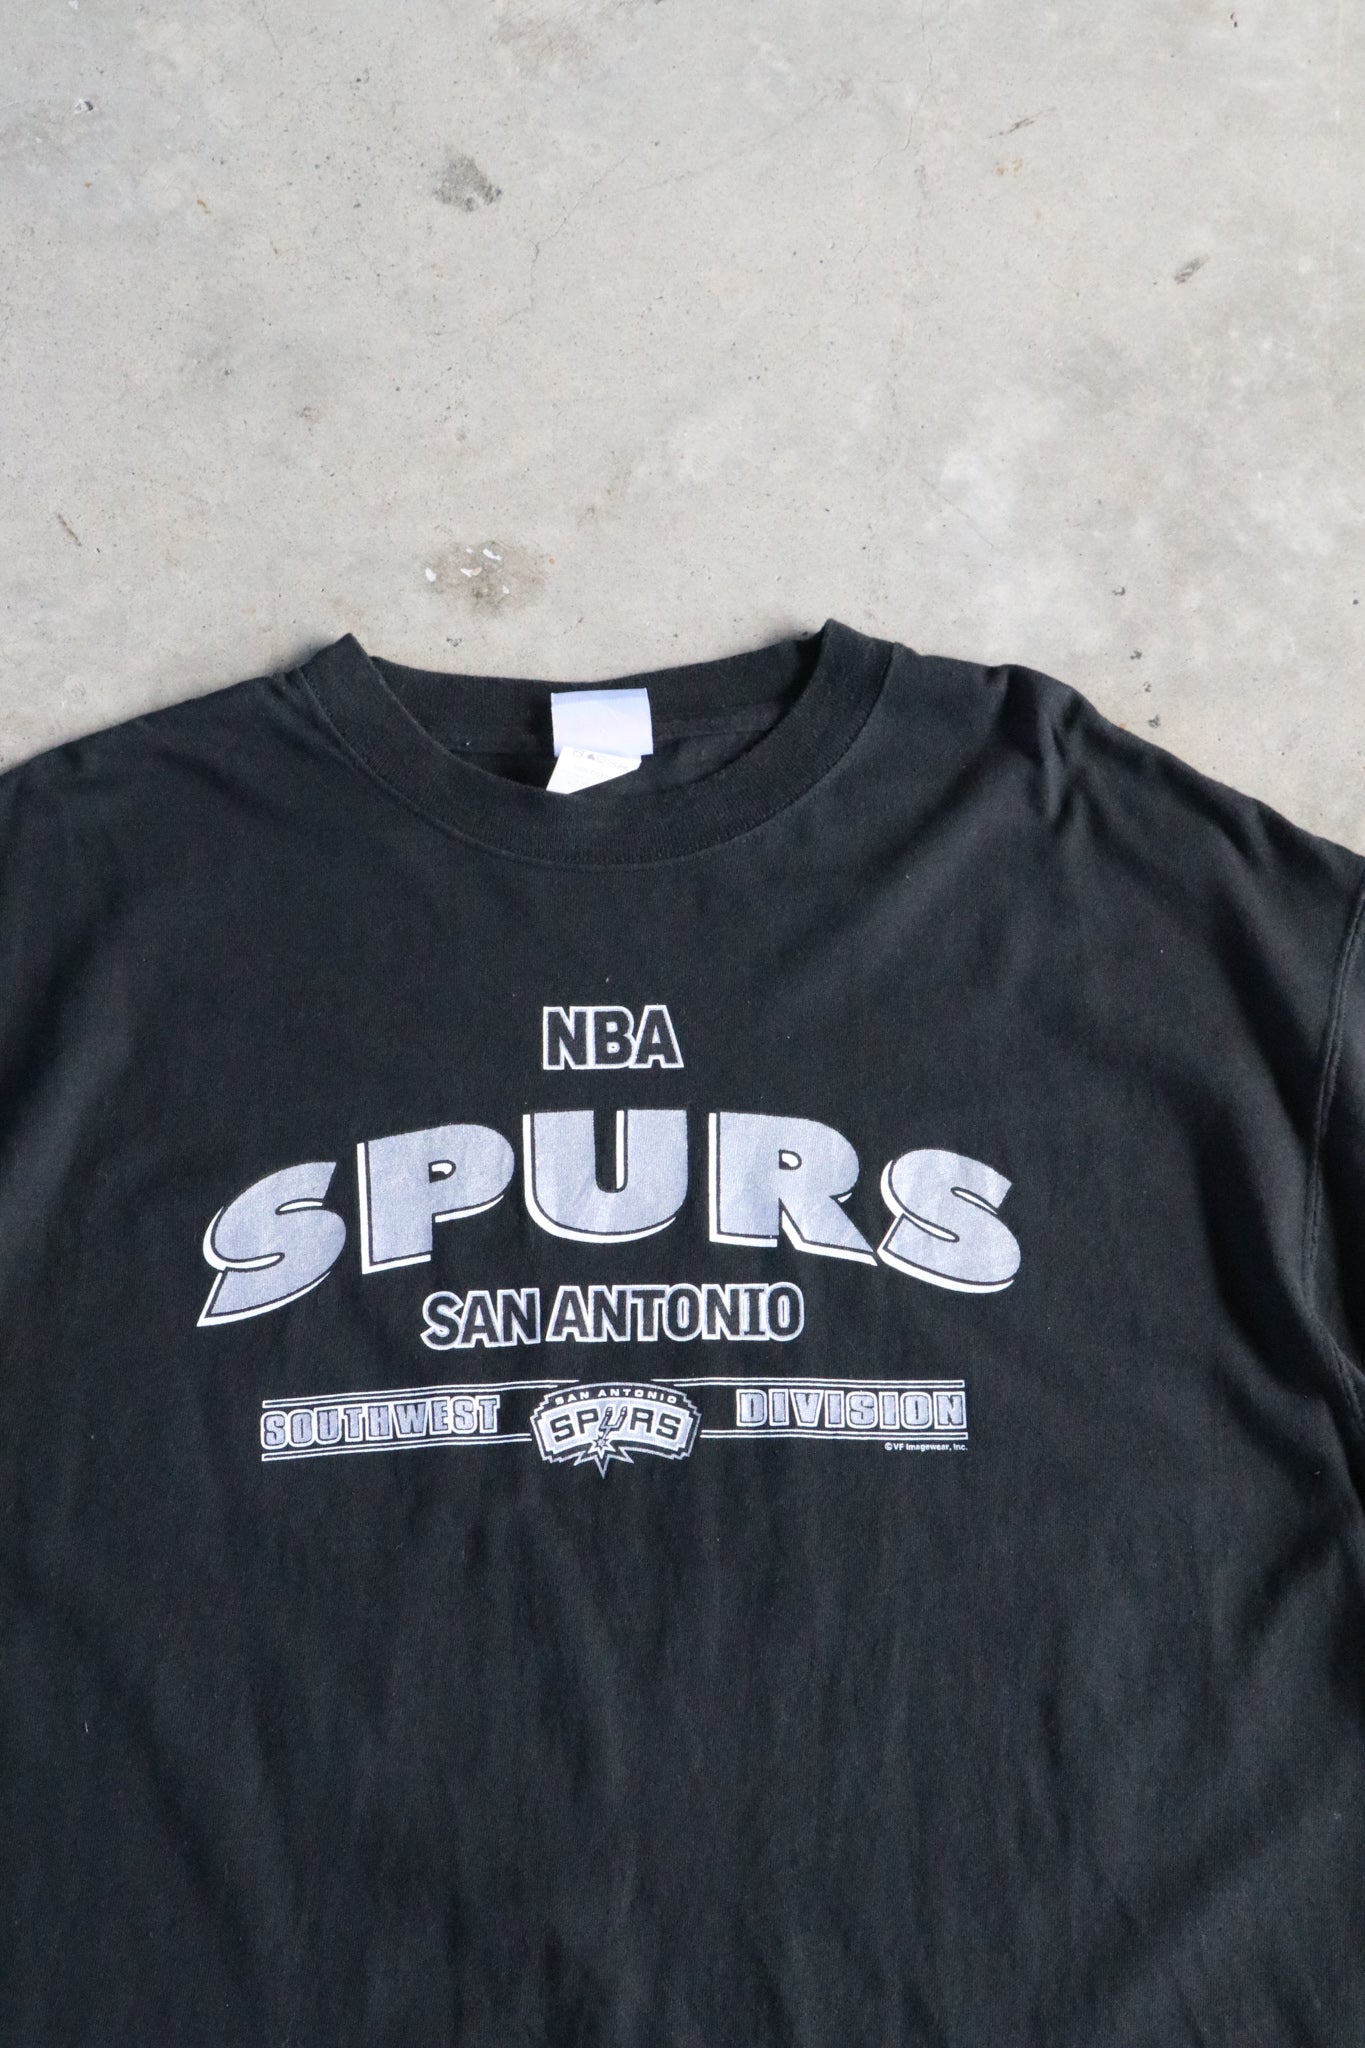 Vintage NBA Spurs Tee XL